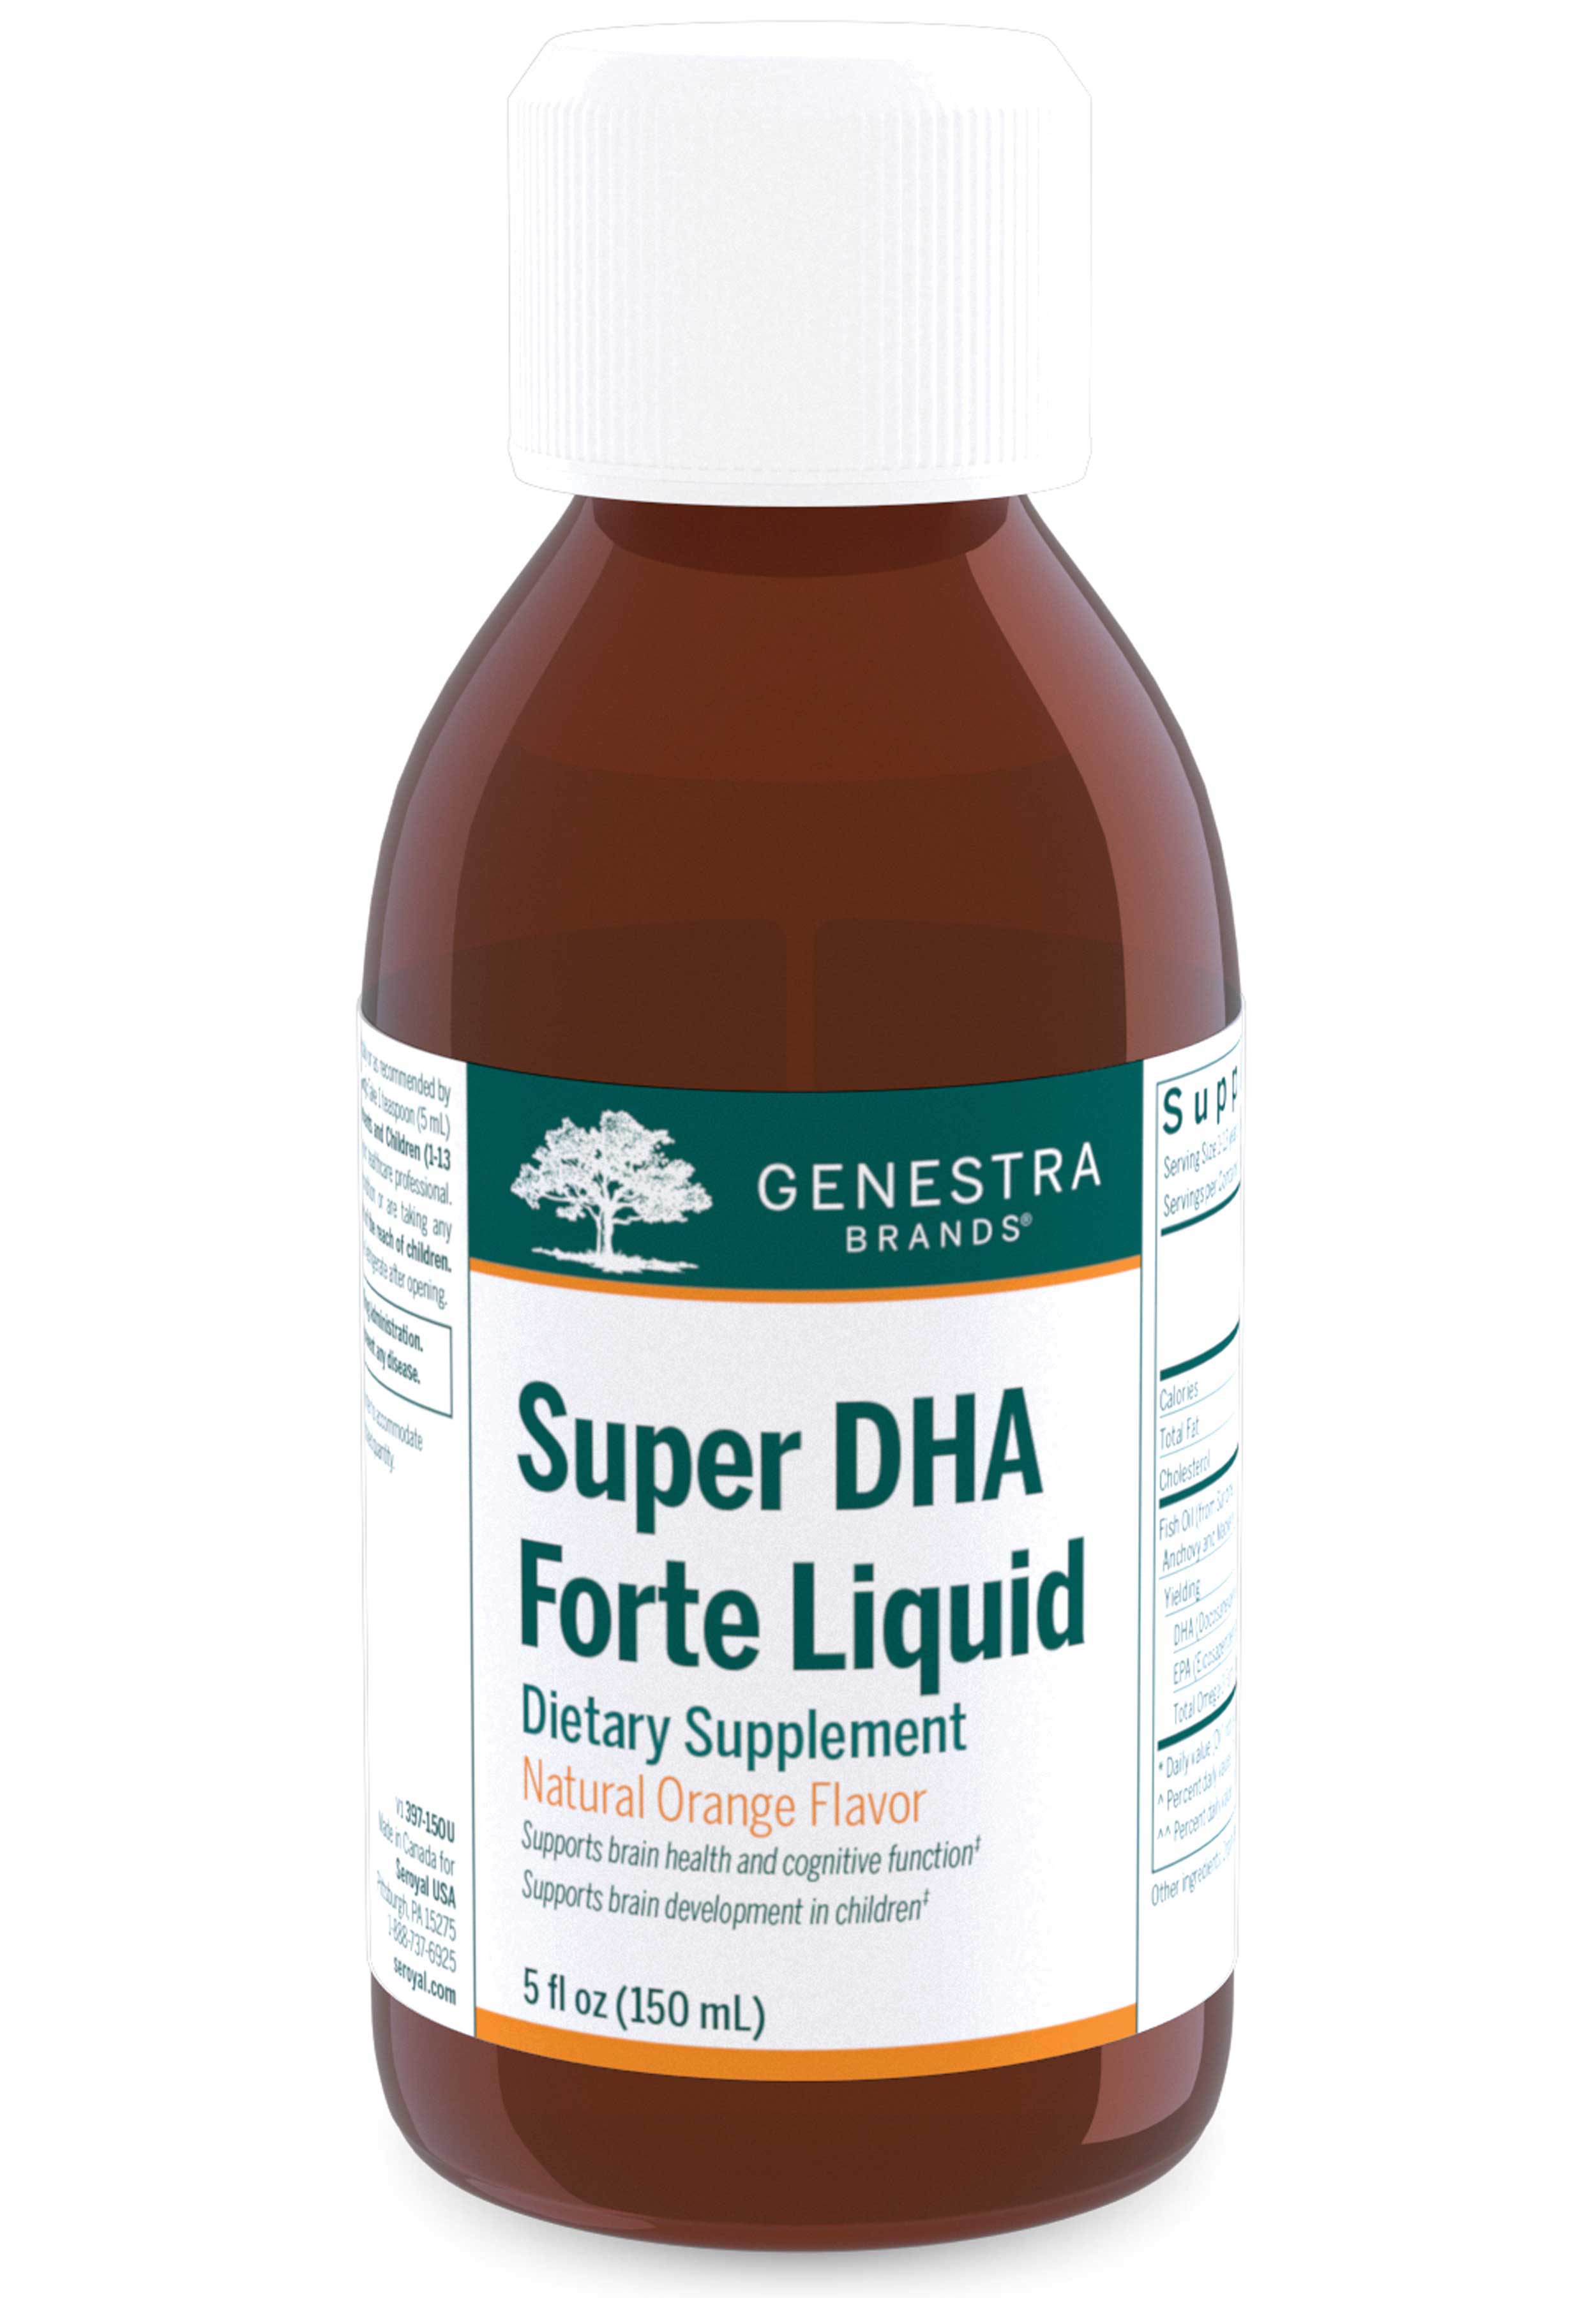 Genestra Brands Super DHA Forte Liquid